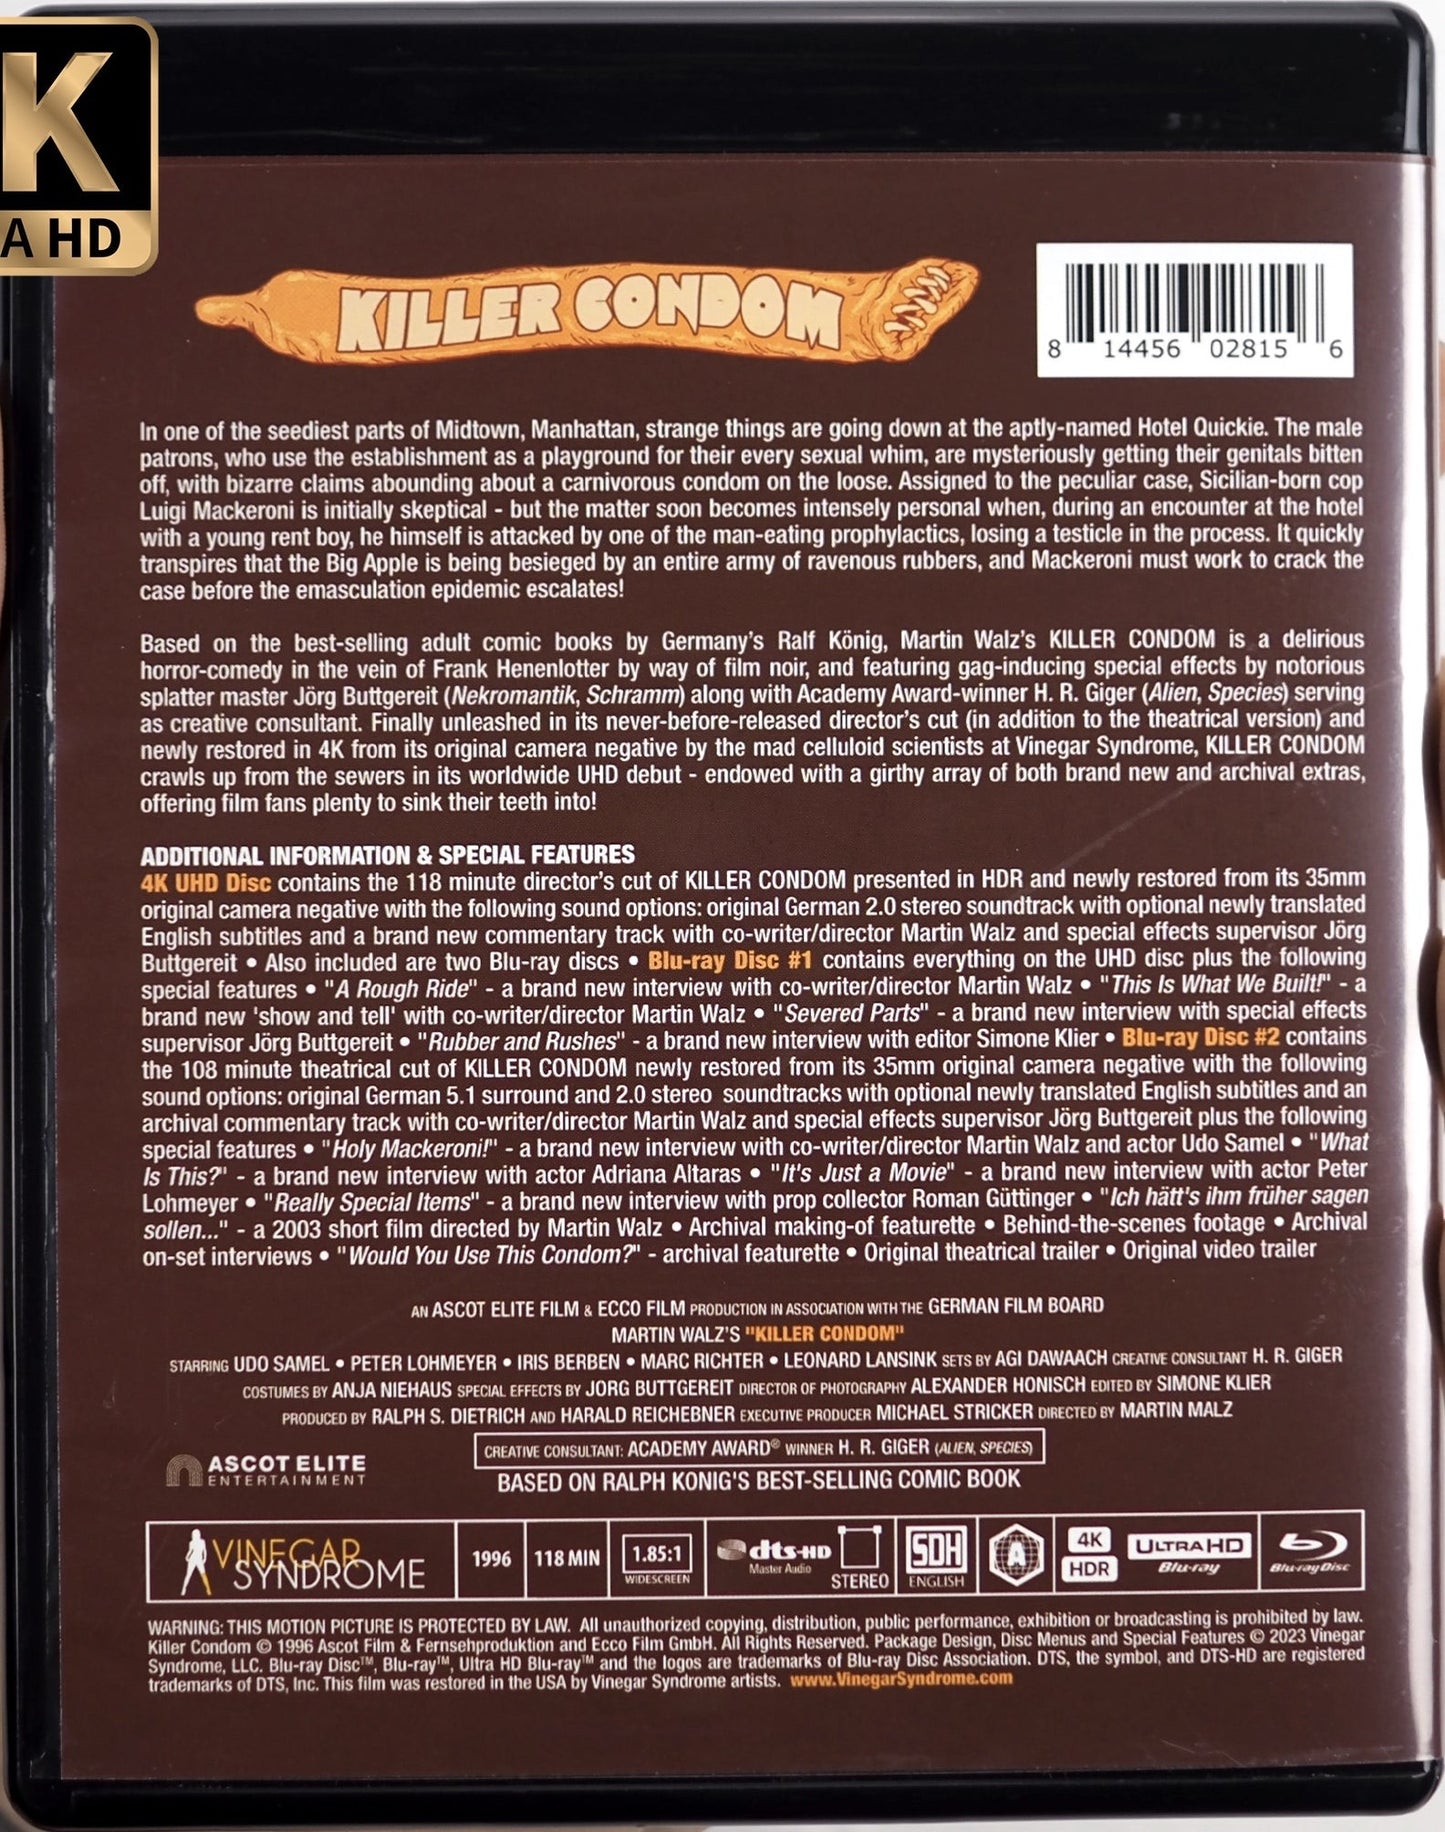 Killer Condom 4K: Limited Edition (VS-441)(Exclusive)